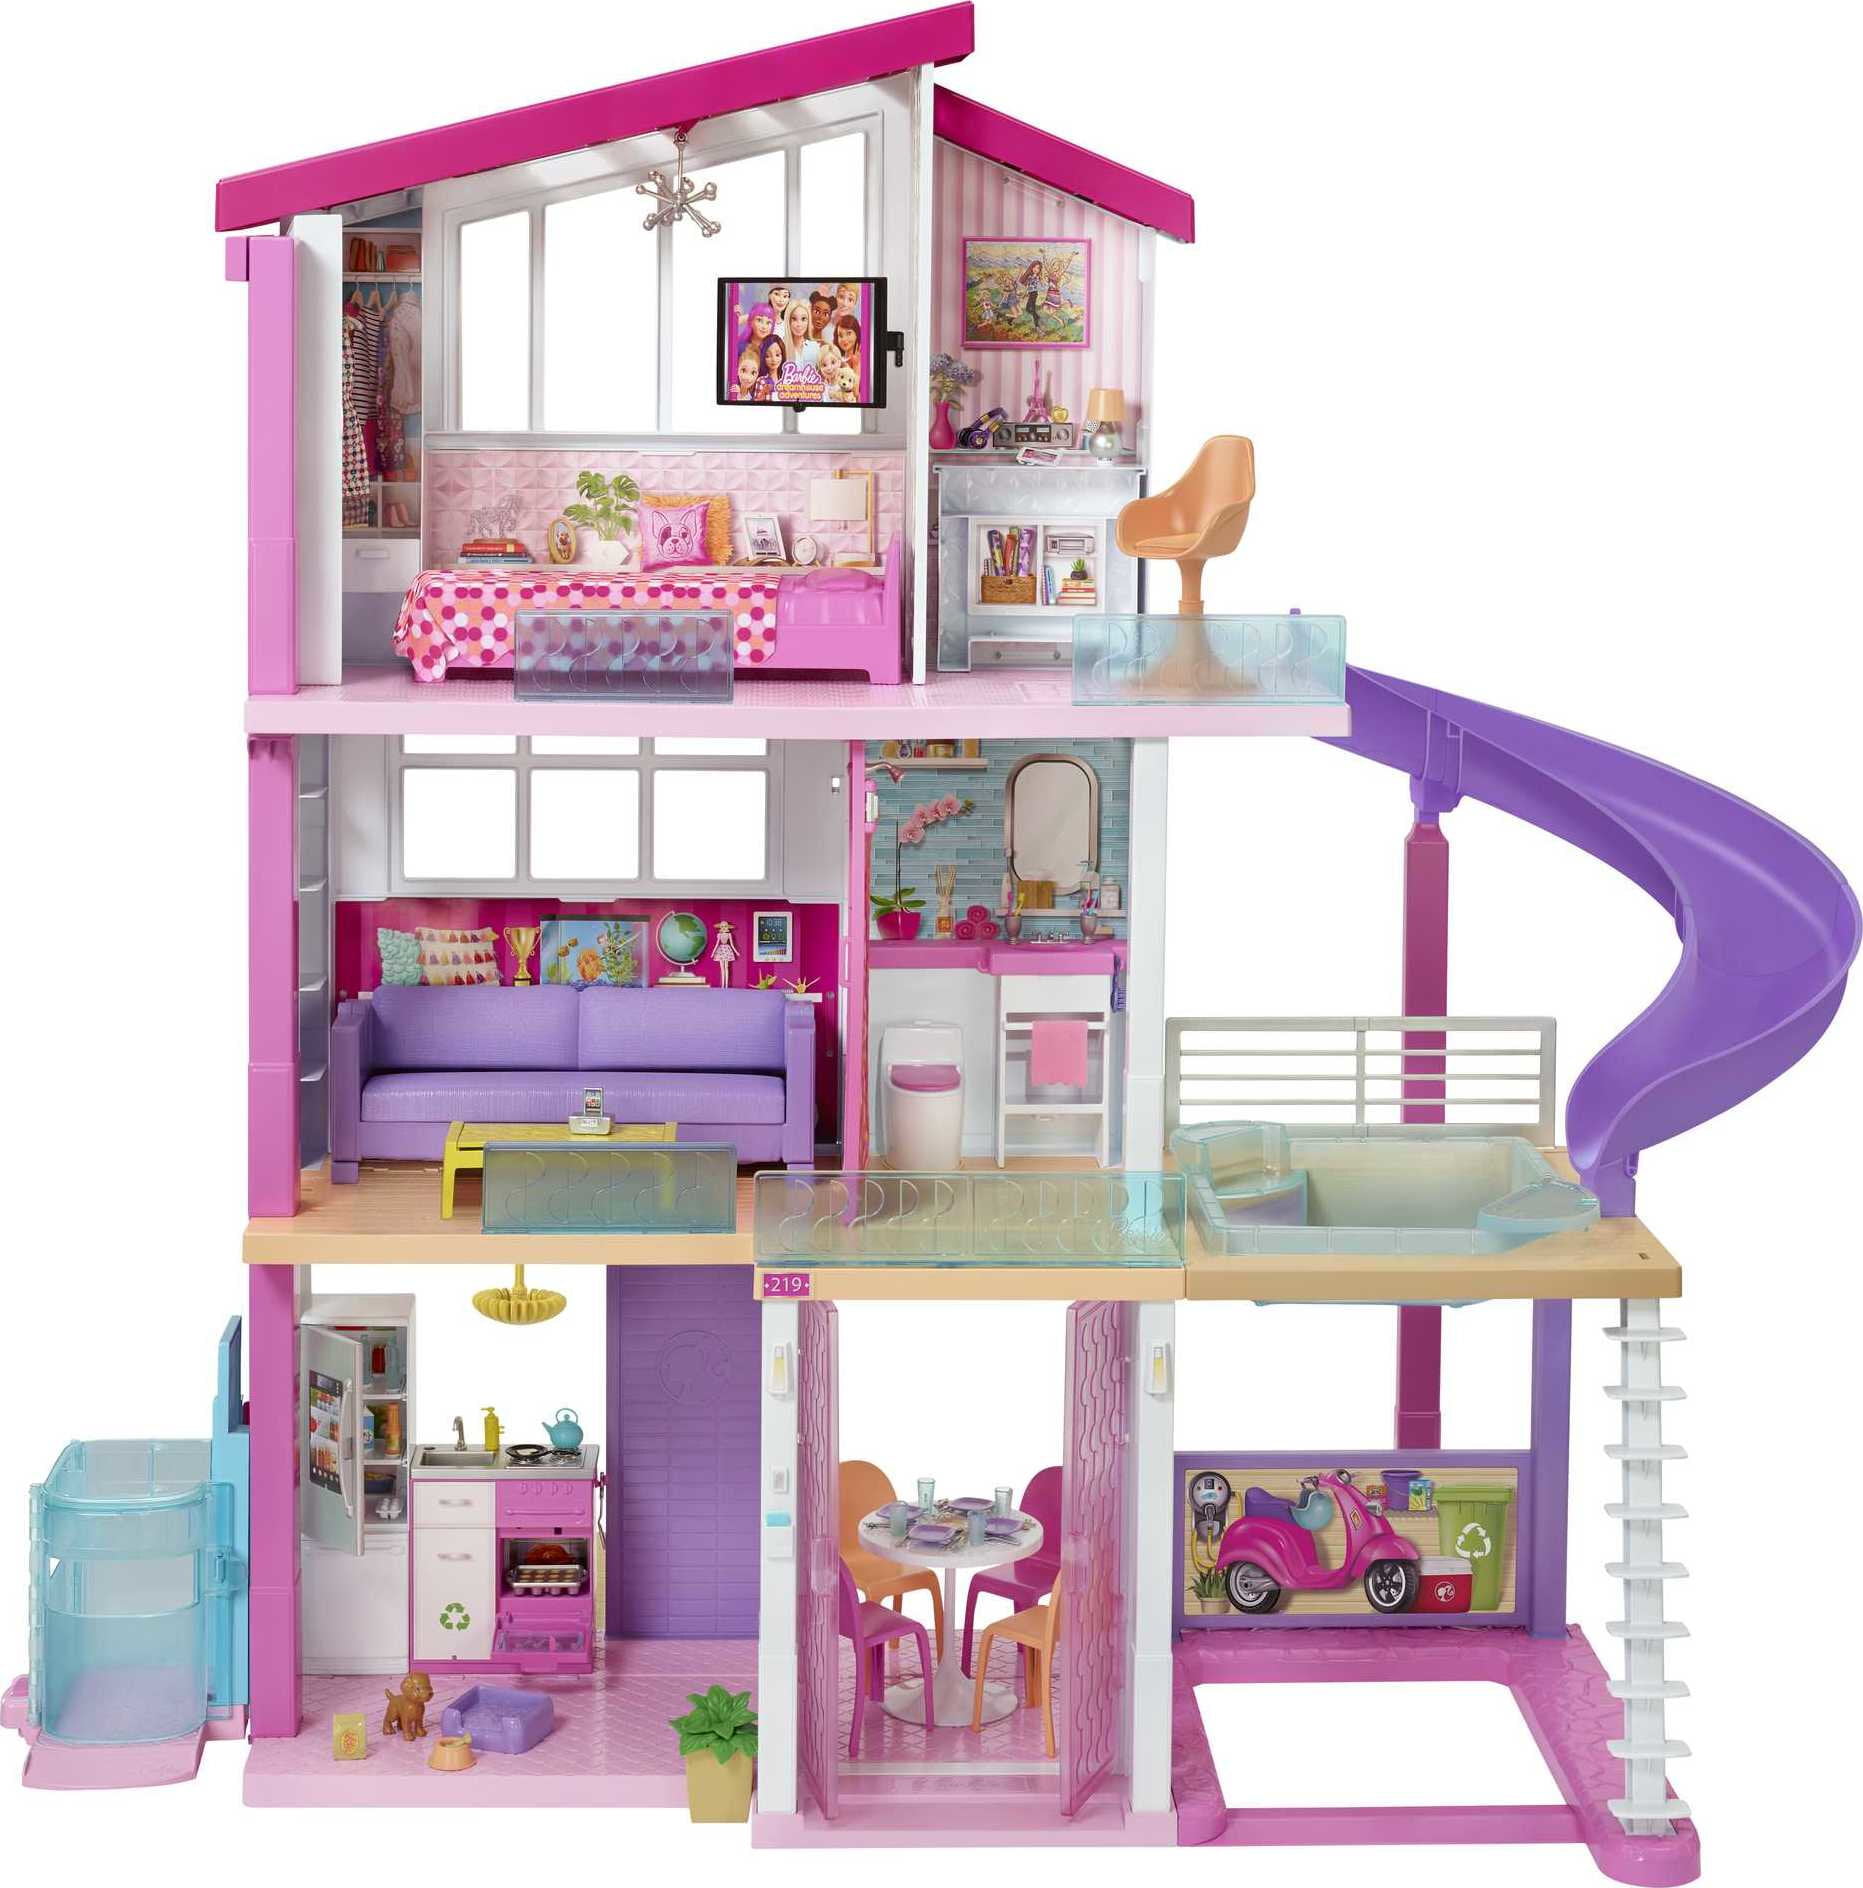 Barbie Dream House Size Dollhouse Furniture Girls Playhouse Fun Play Townhouse 313043740797 